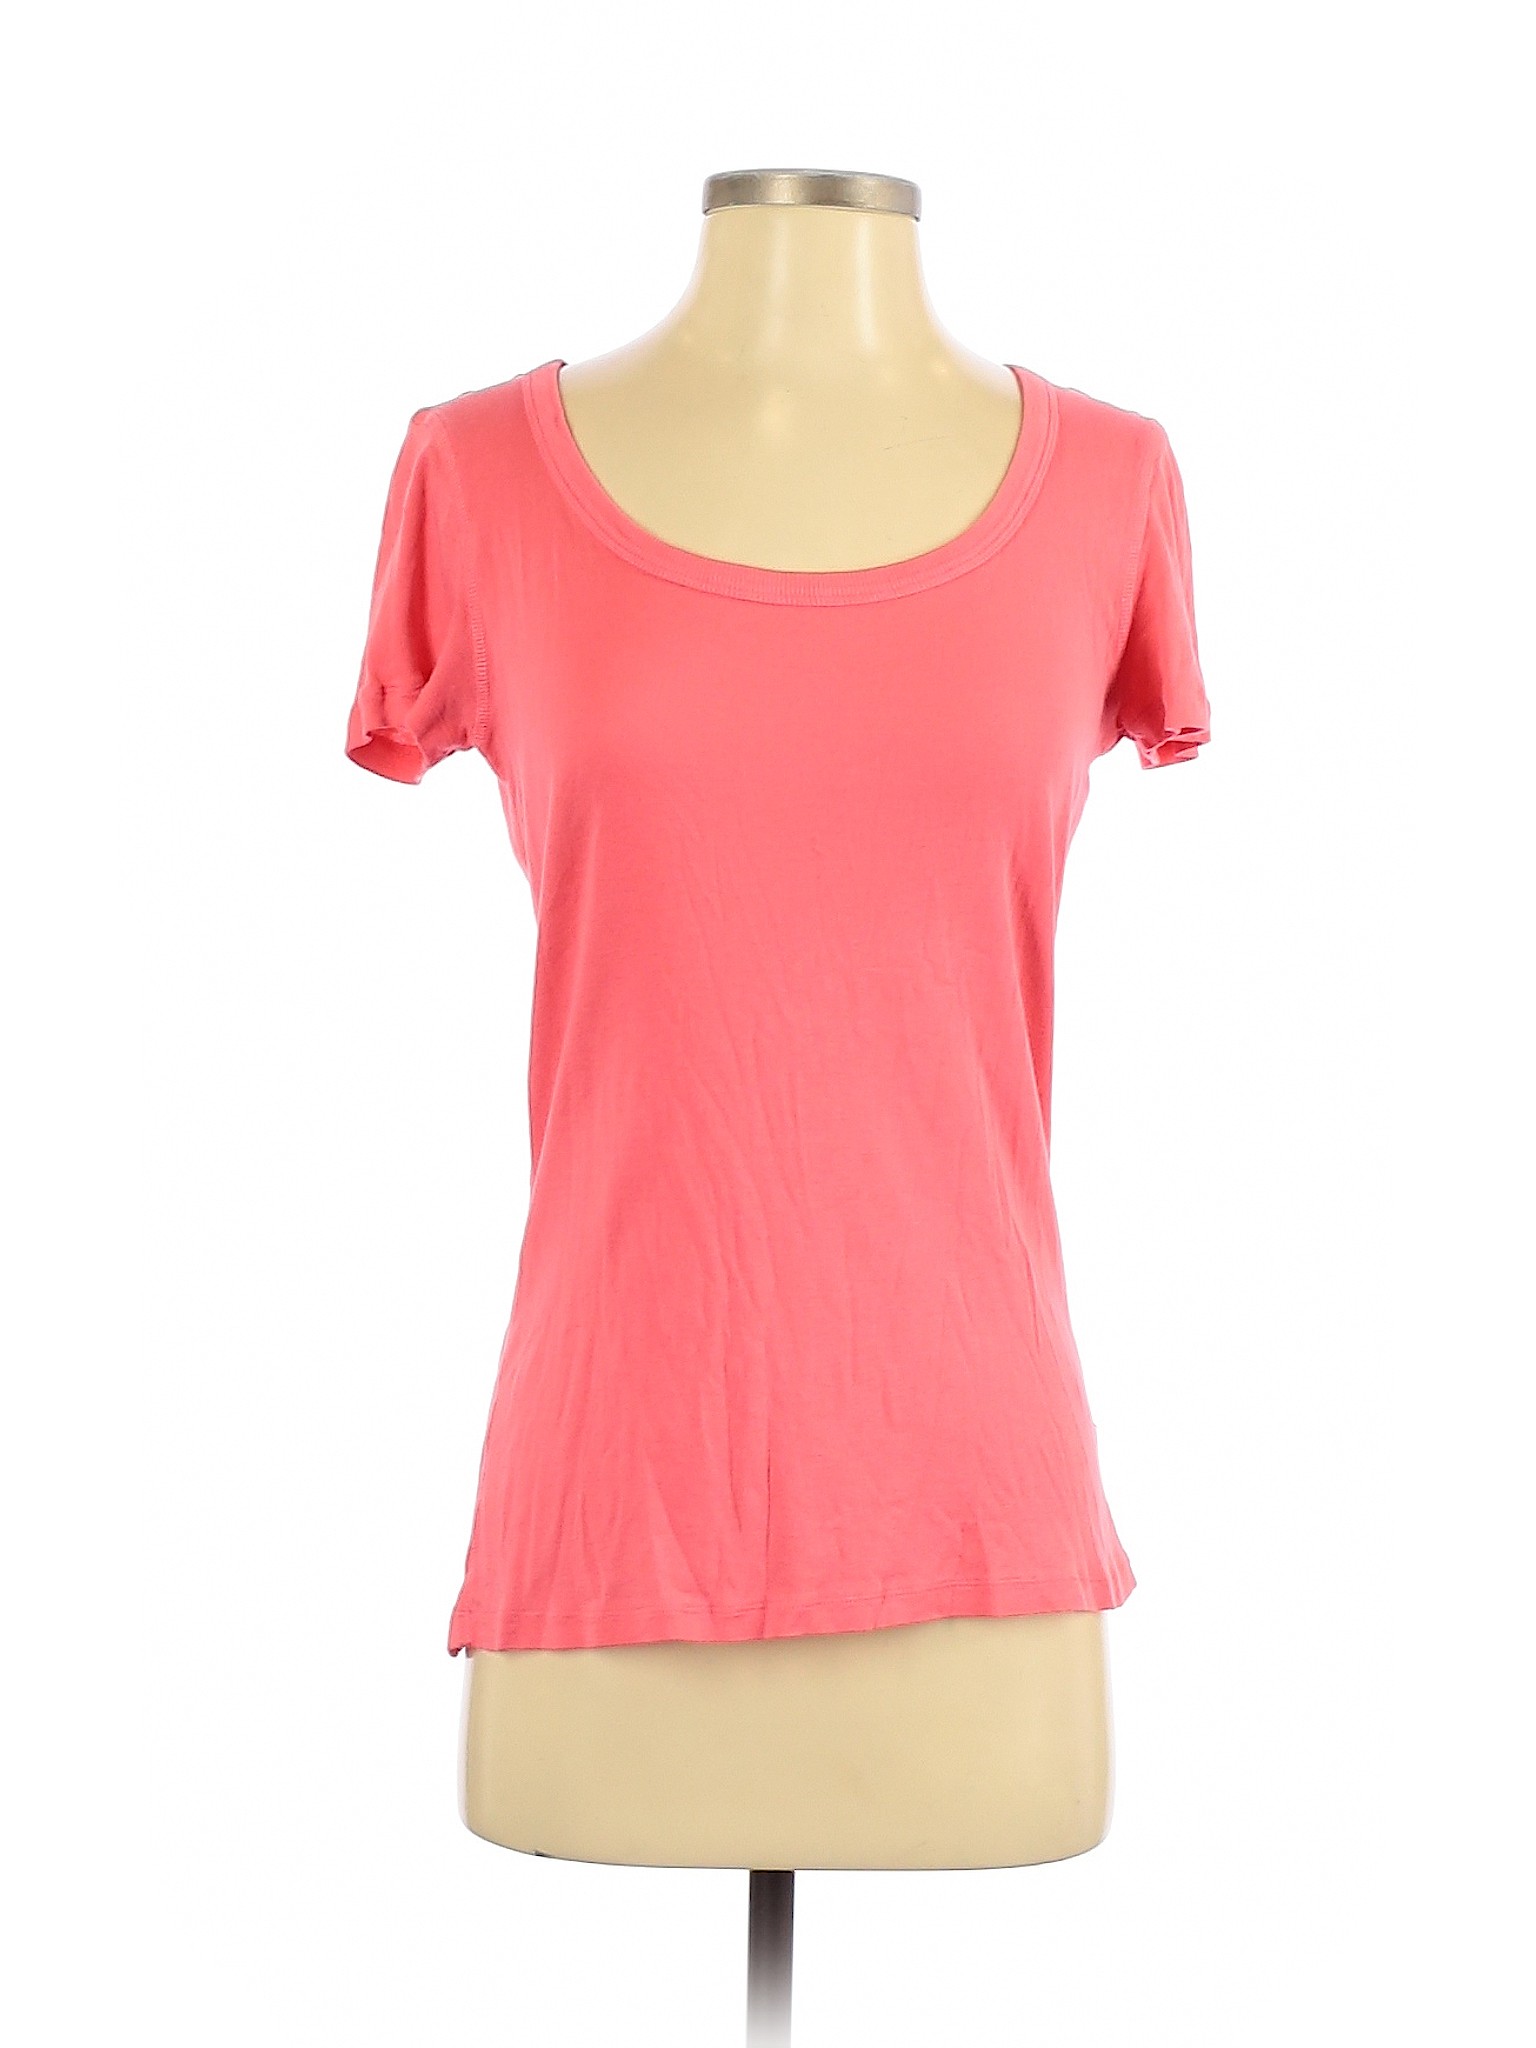 Joe Fresh Women Pink Short Sleeve T-Shirt S | eBay